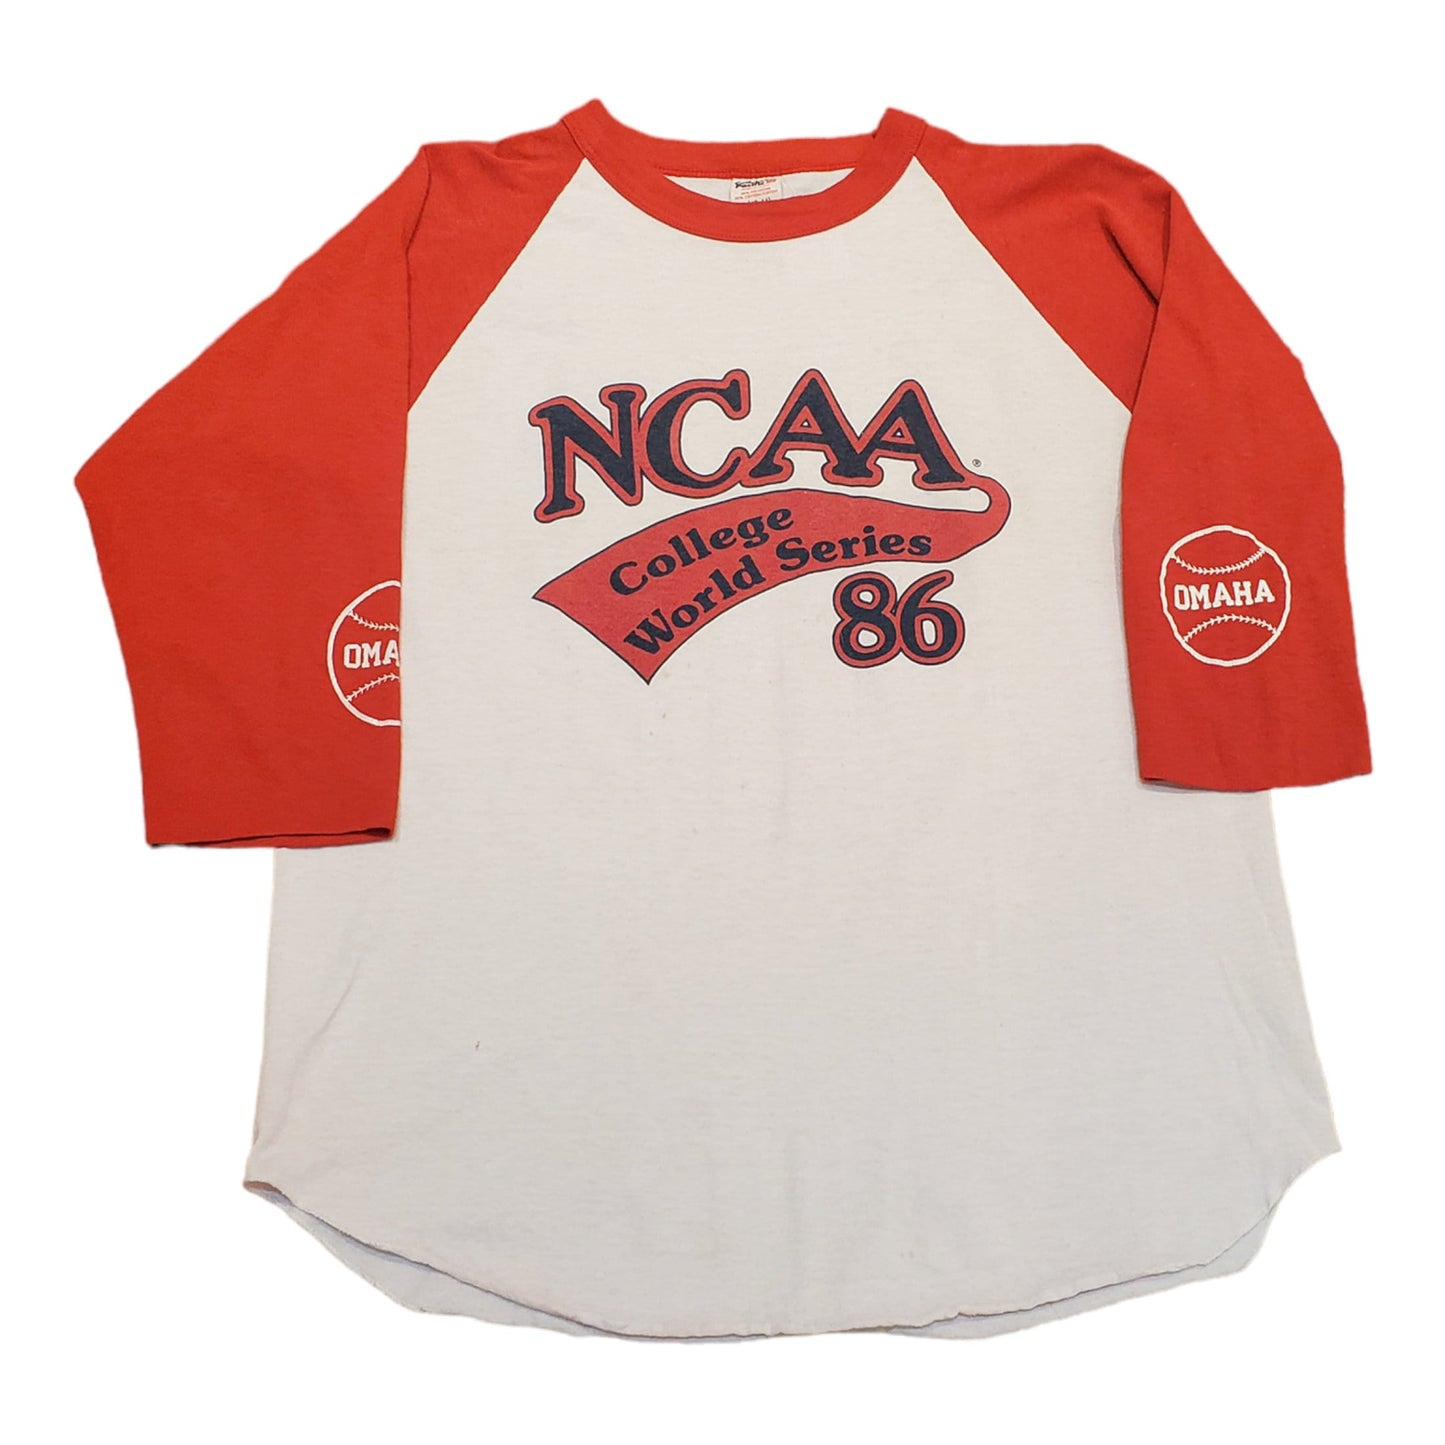 1980s 1986 College World Series Omaha Baseball Raglan T-Shirt Made in USA Size S